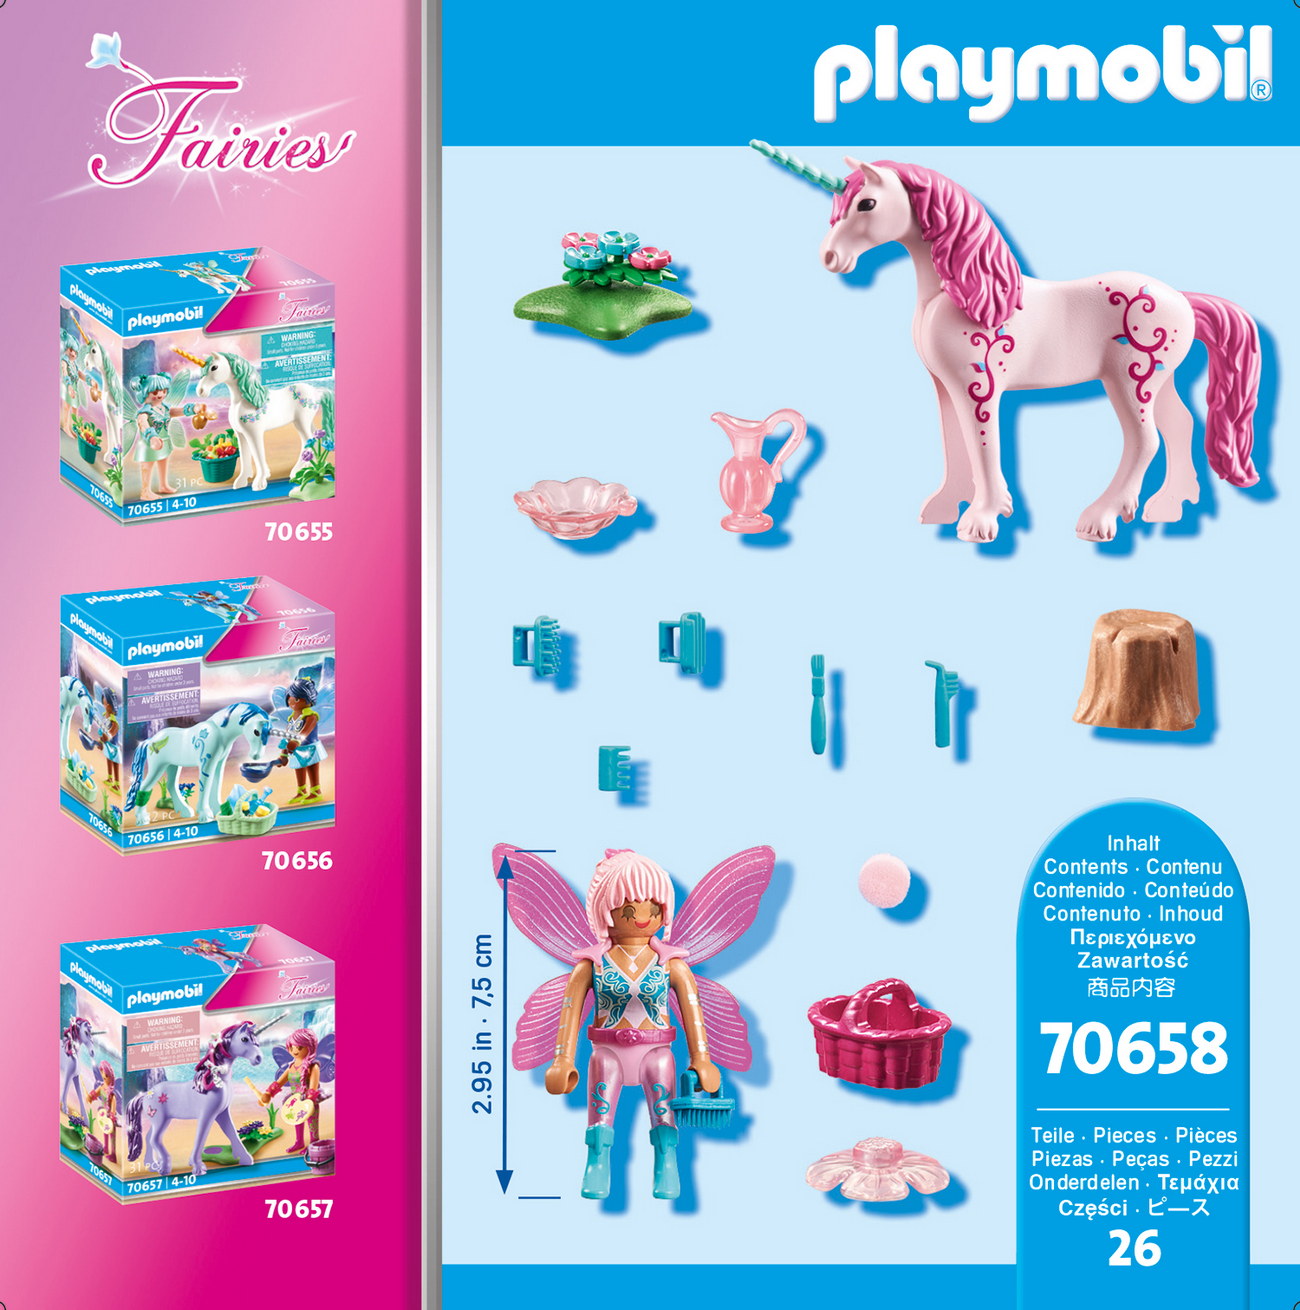 Playmobil 70658 - Einhorn mit Pflege Fee - Fairies